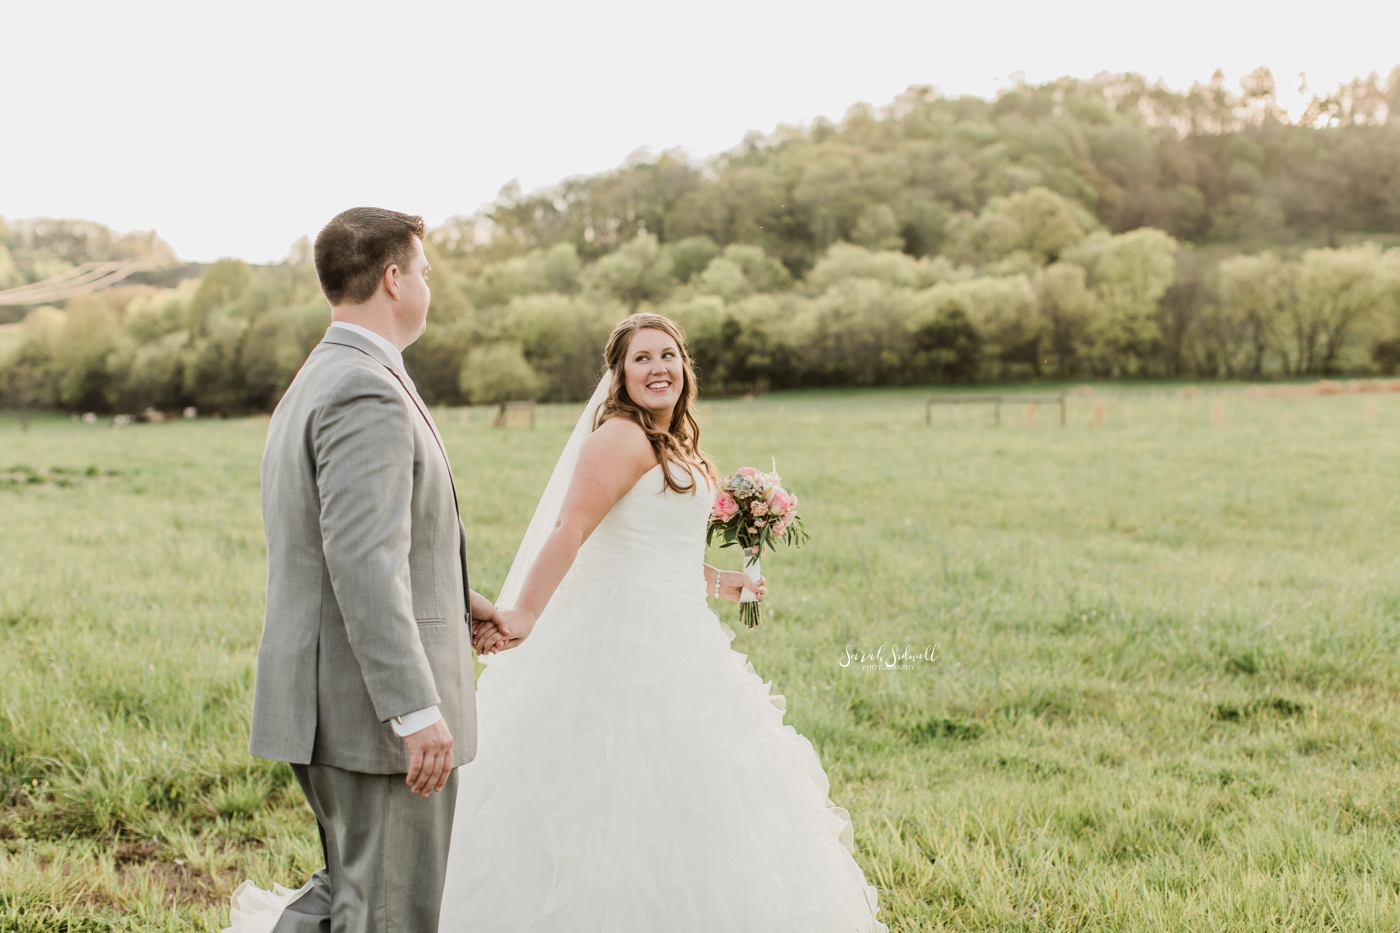 Battle Mountain Farm Wedding | Sarah Sidwell Photography